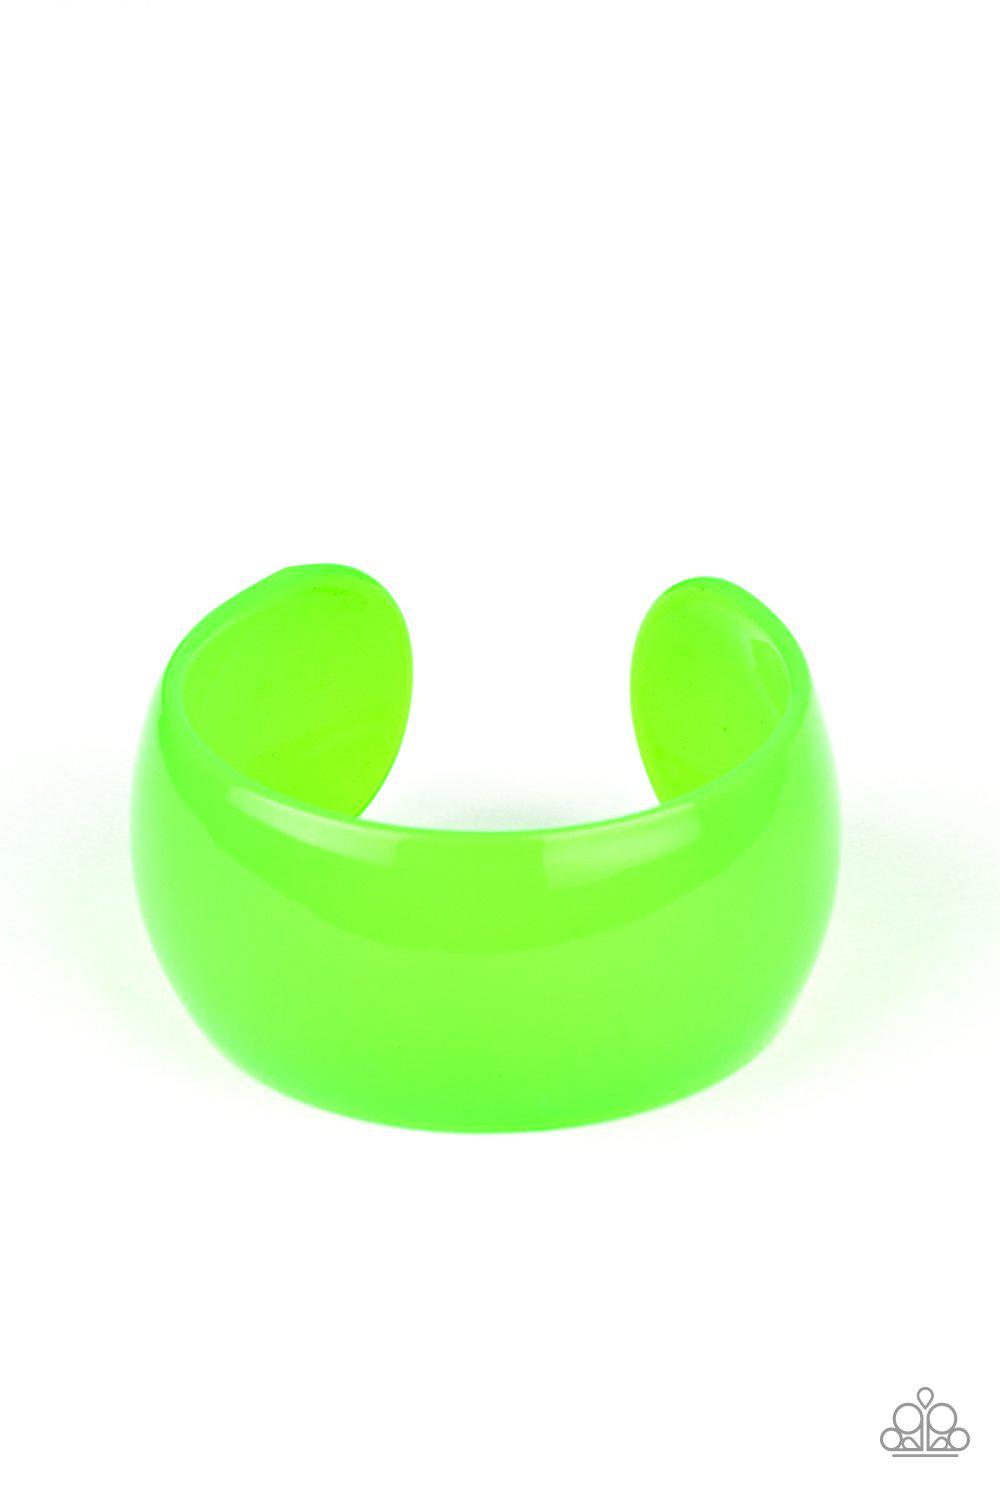 Fluent in Flamboyance Neon Green Acrylic Cuff Bracelet - Paparazzi Accessories-CarasShop.com - $5 Jewelry by Cara Jewels